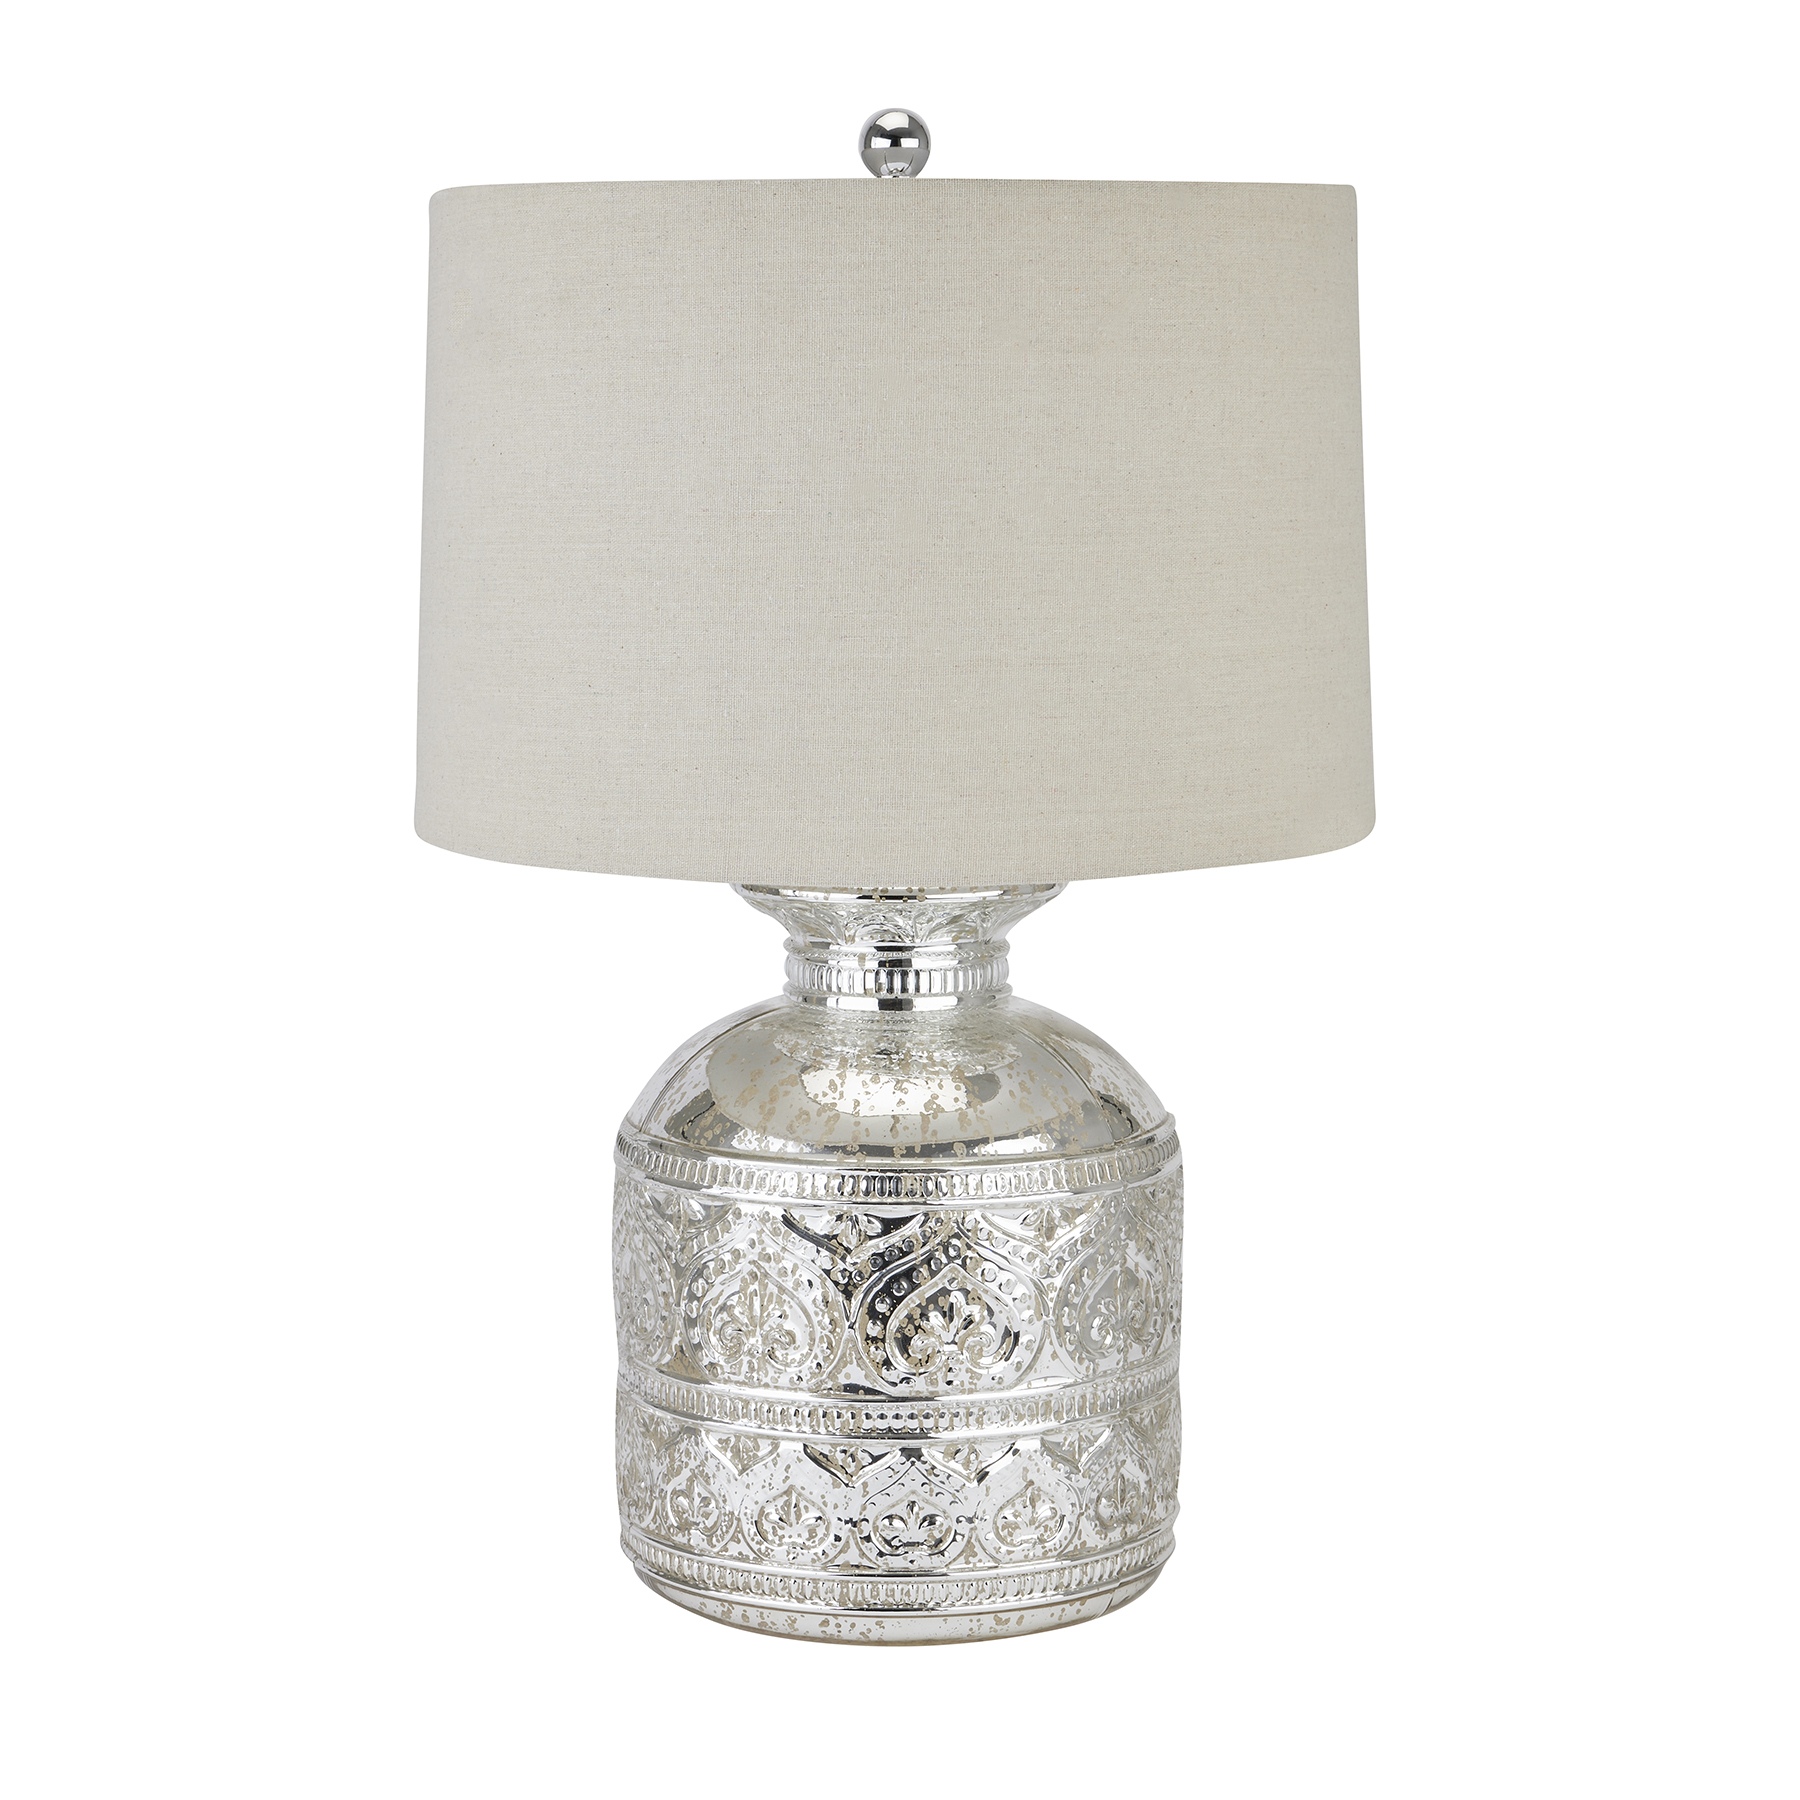 Darcy Mercury Glass Table Lamp - Image 1